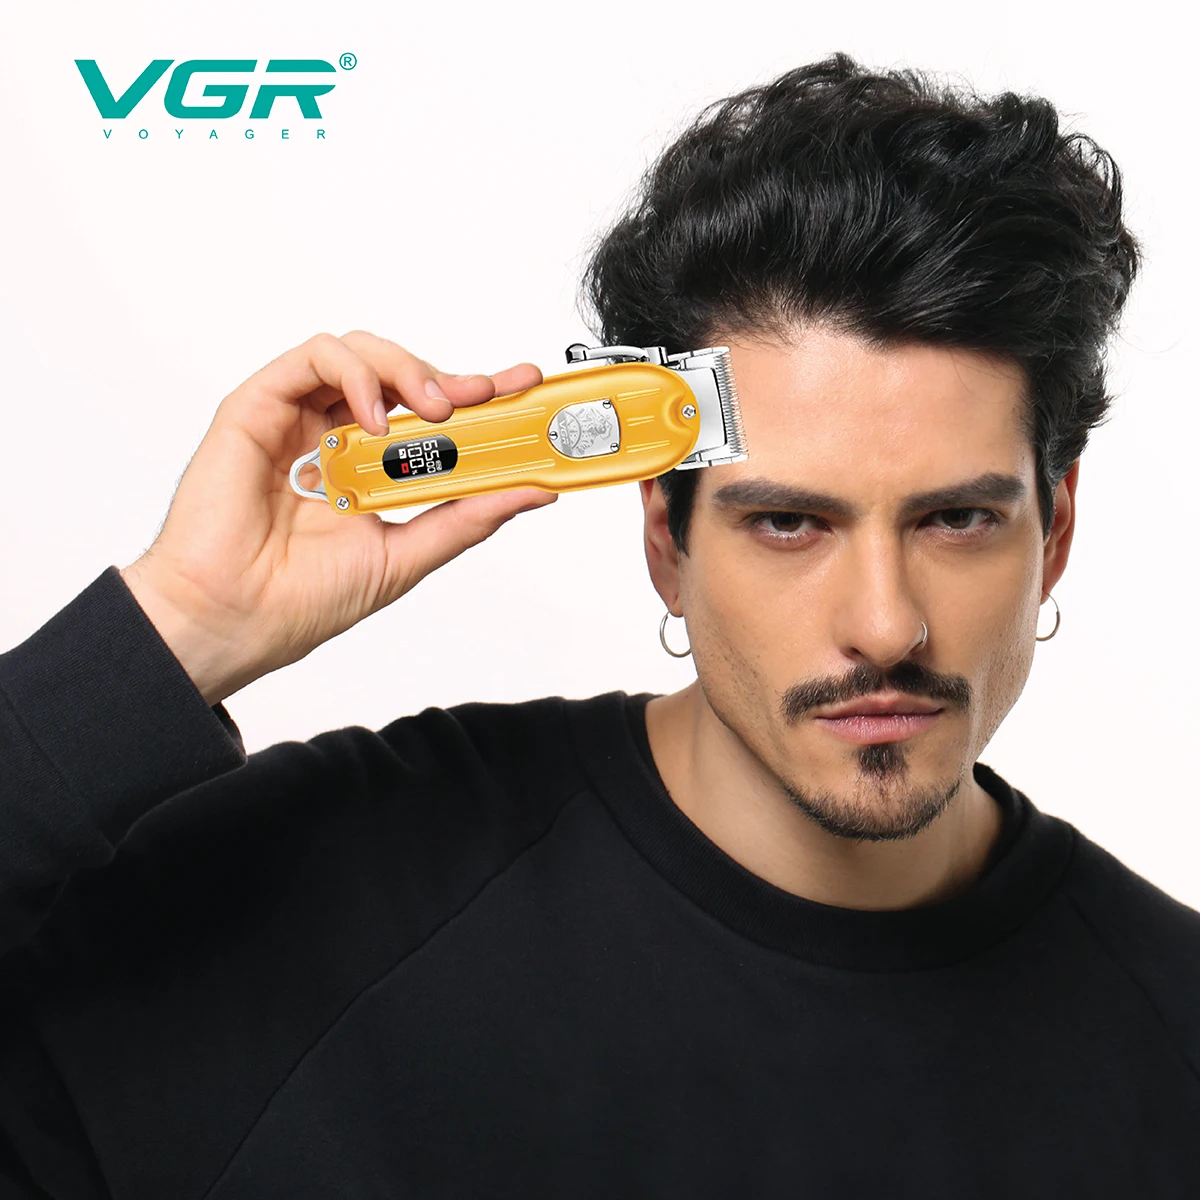 VGR שיער גוזז שיער מקצועי גוזם אלחוטי שיער מכונת חיתוך חשמלי הספר תצוגה דיגיטלית קליפר לגברים V-092 - 4